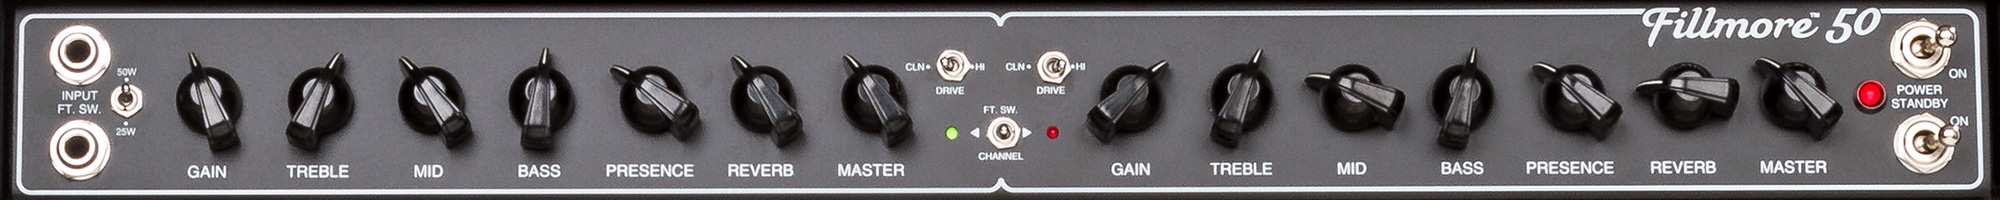 Mesa Boogie Fillmore 50 Control Panel Detail